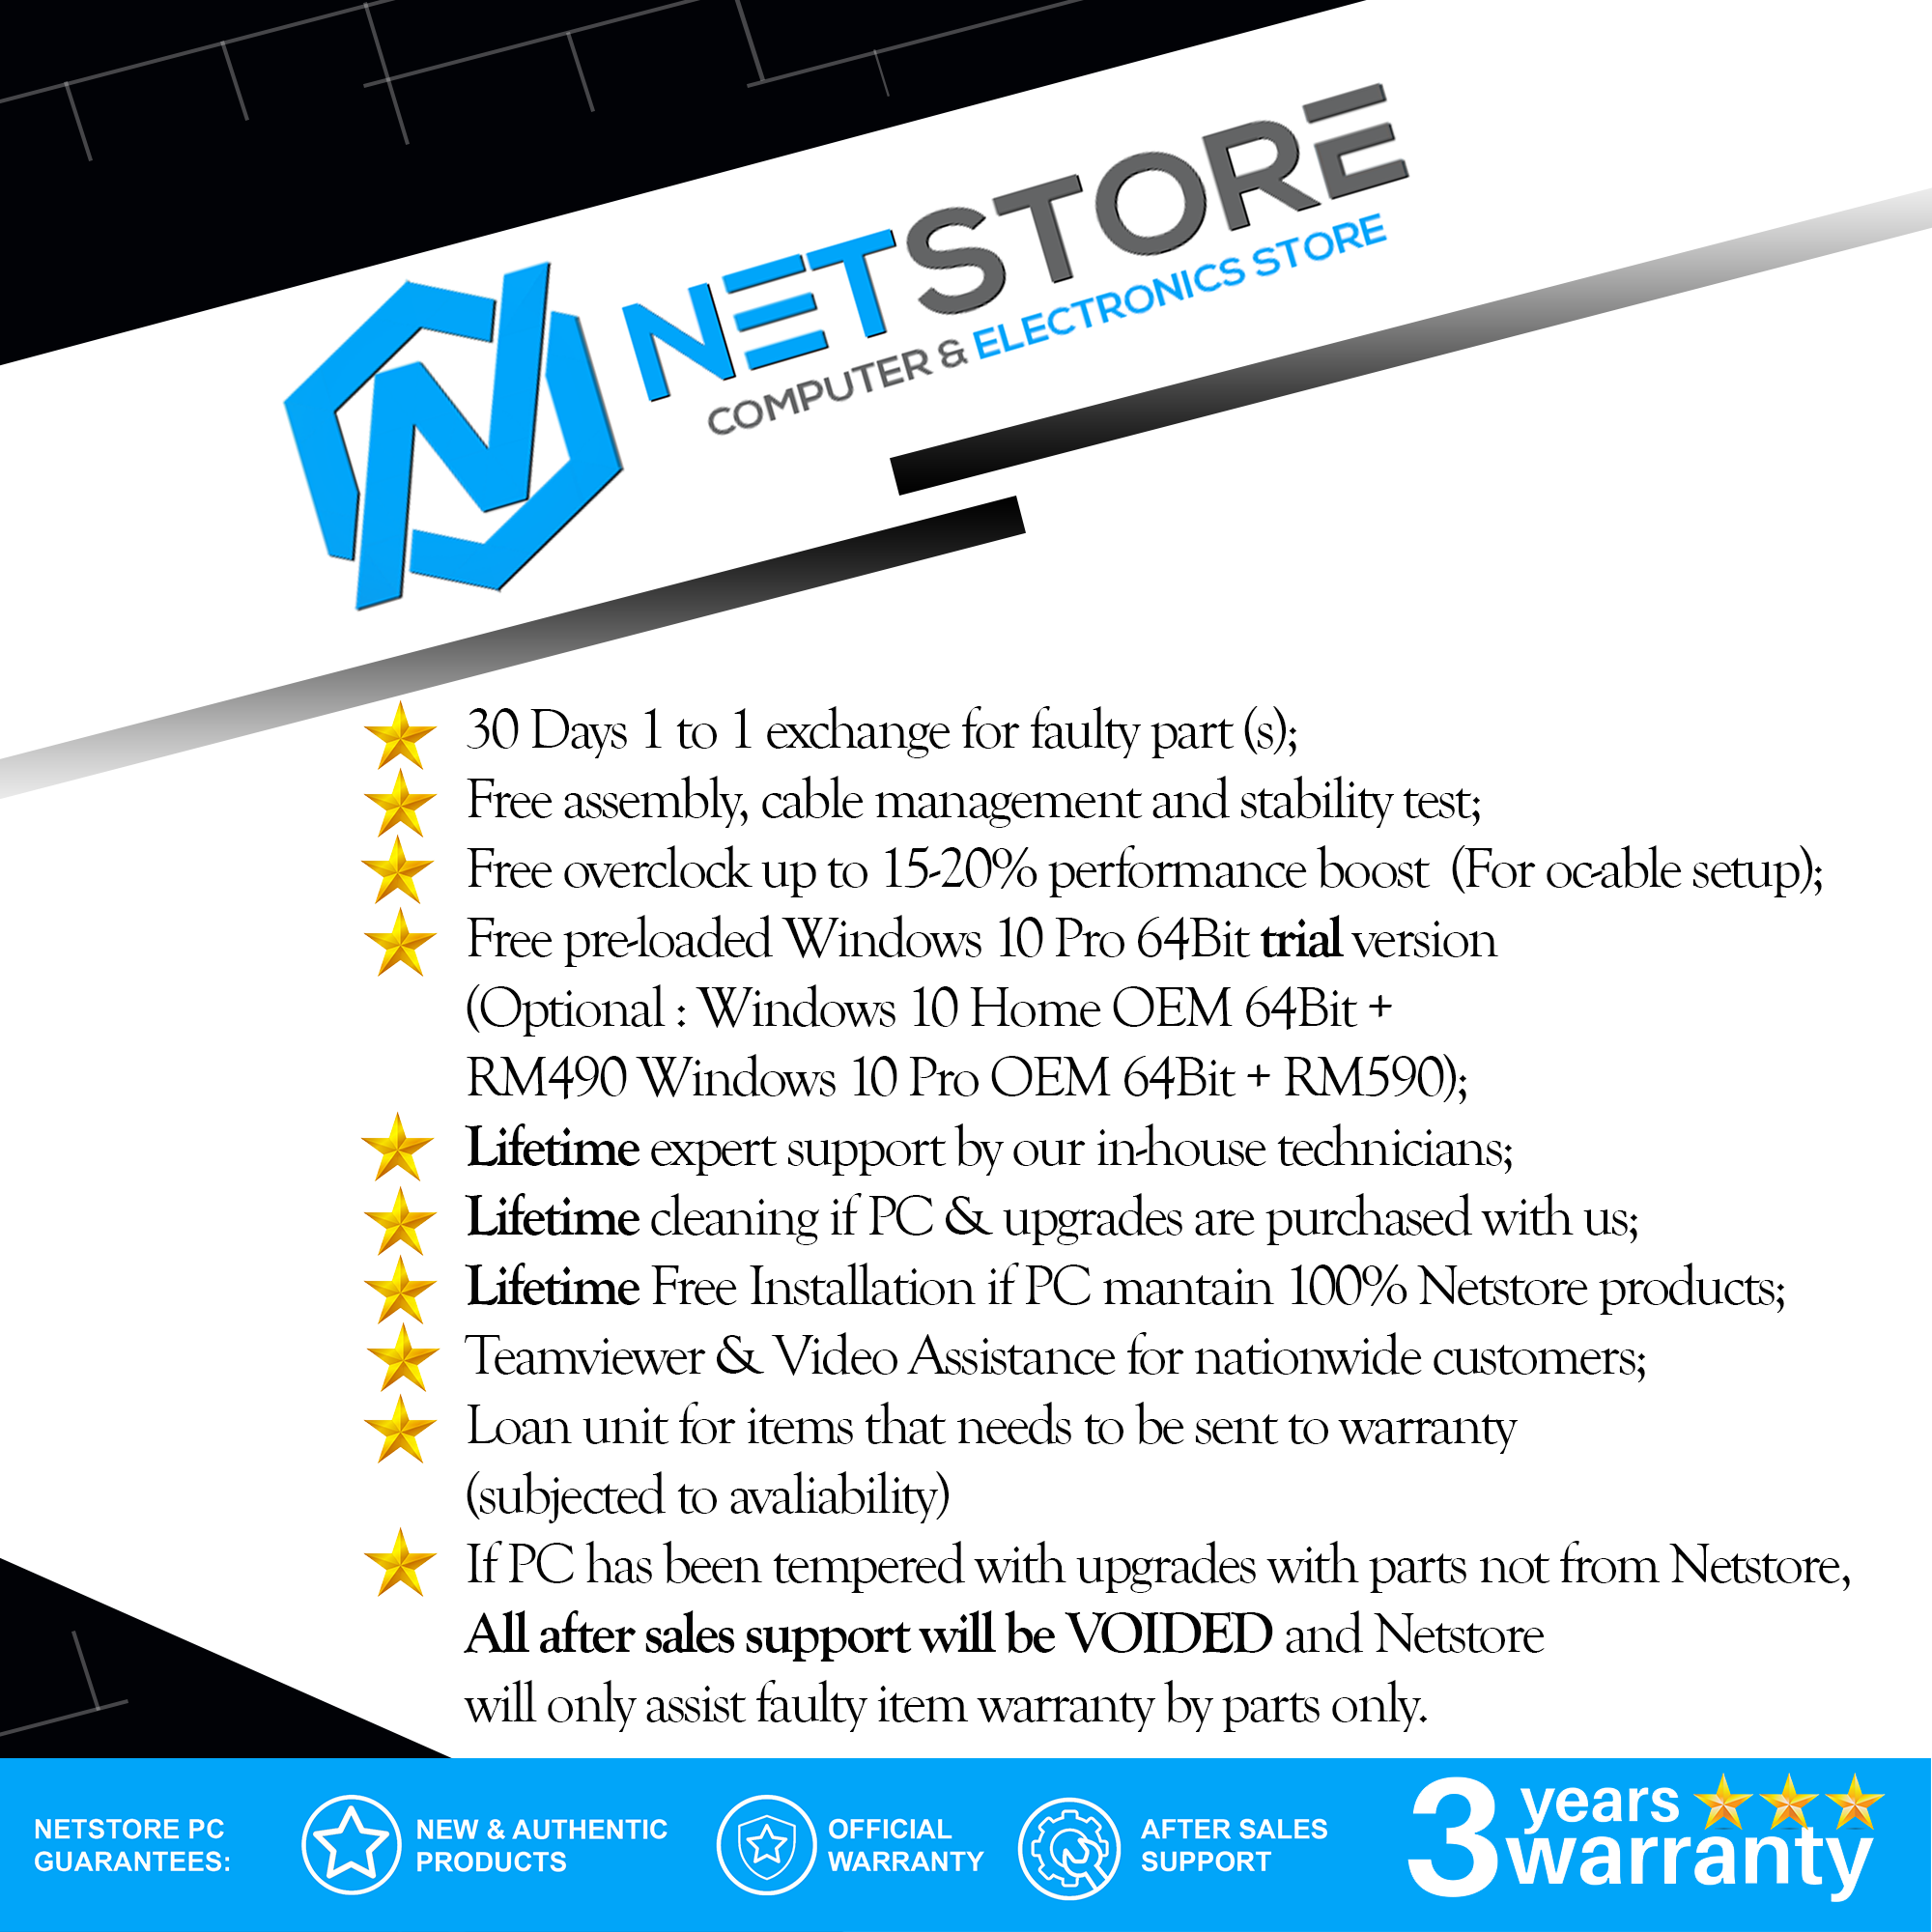 NETSTORE - i5-12400F, 16GB RAM, 256GB NVME , RTX 3060 GAMING PC